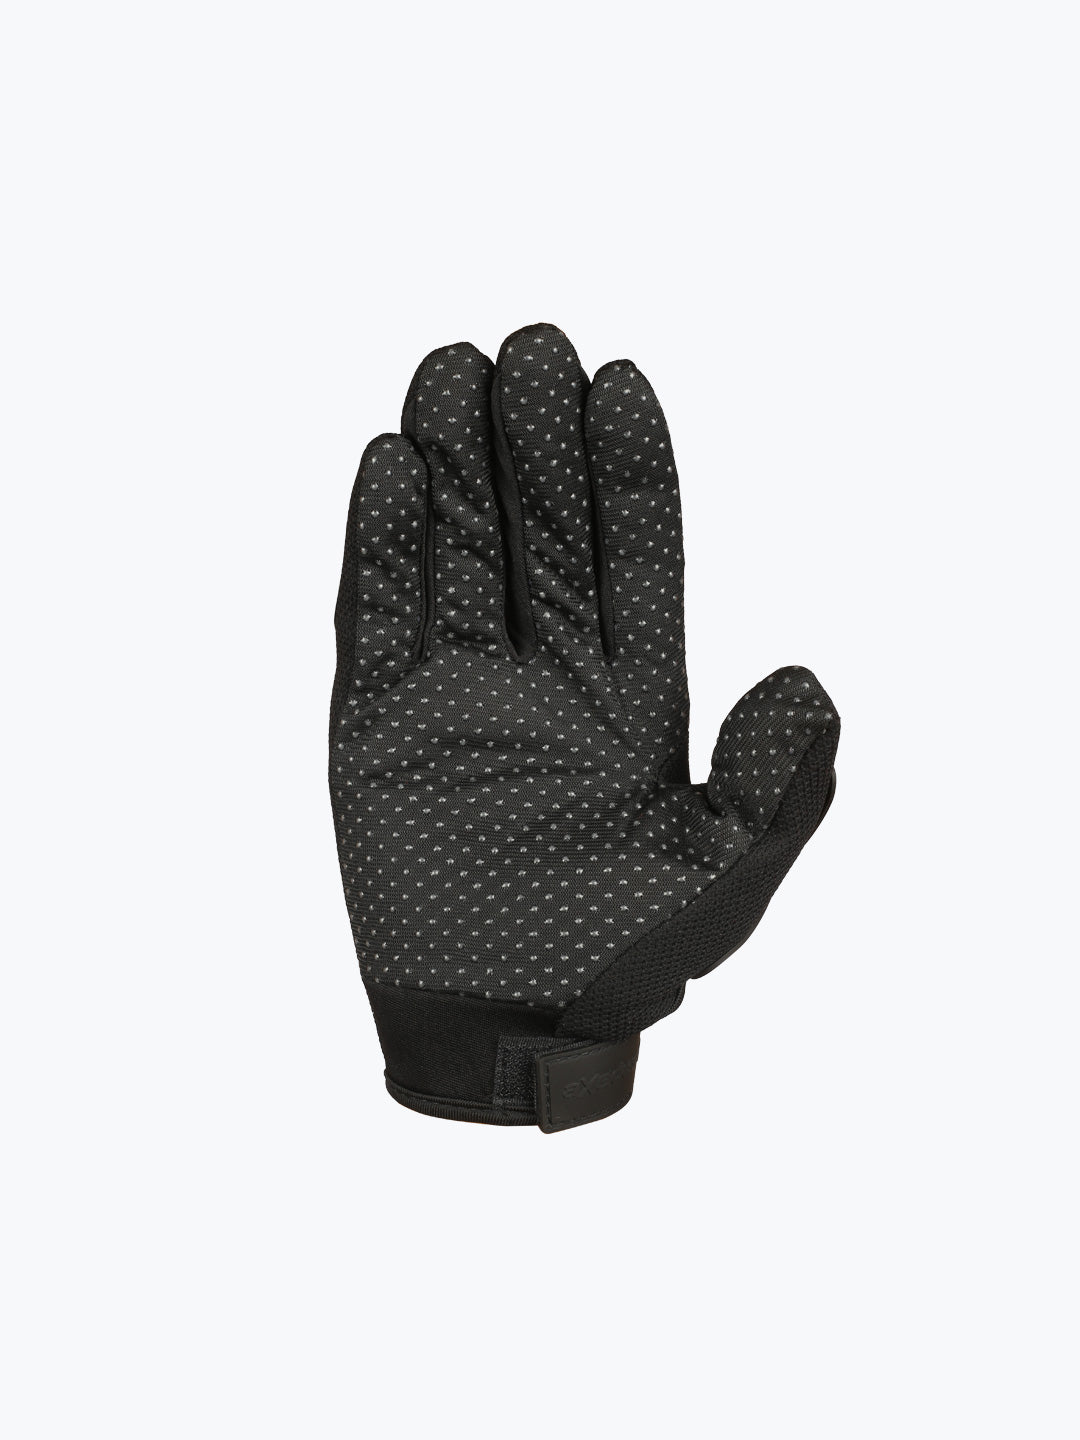 AXG Glove Black Grey